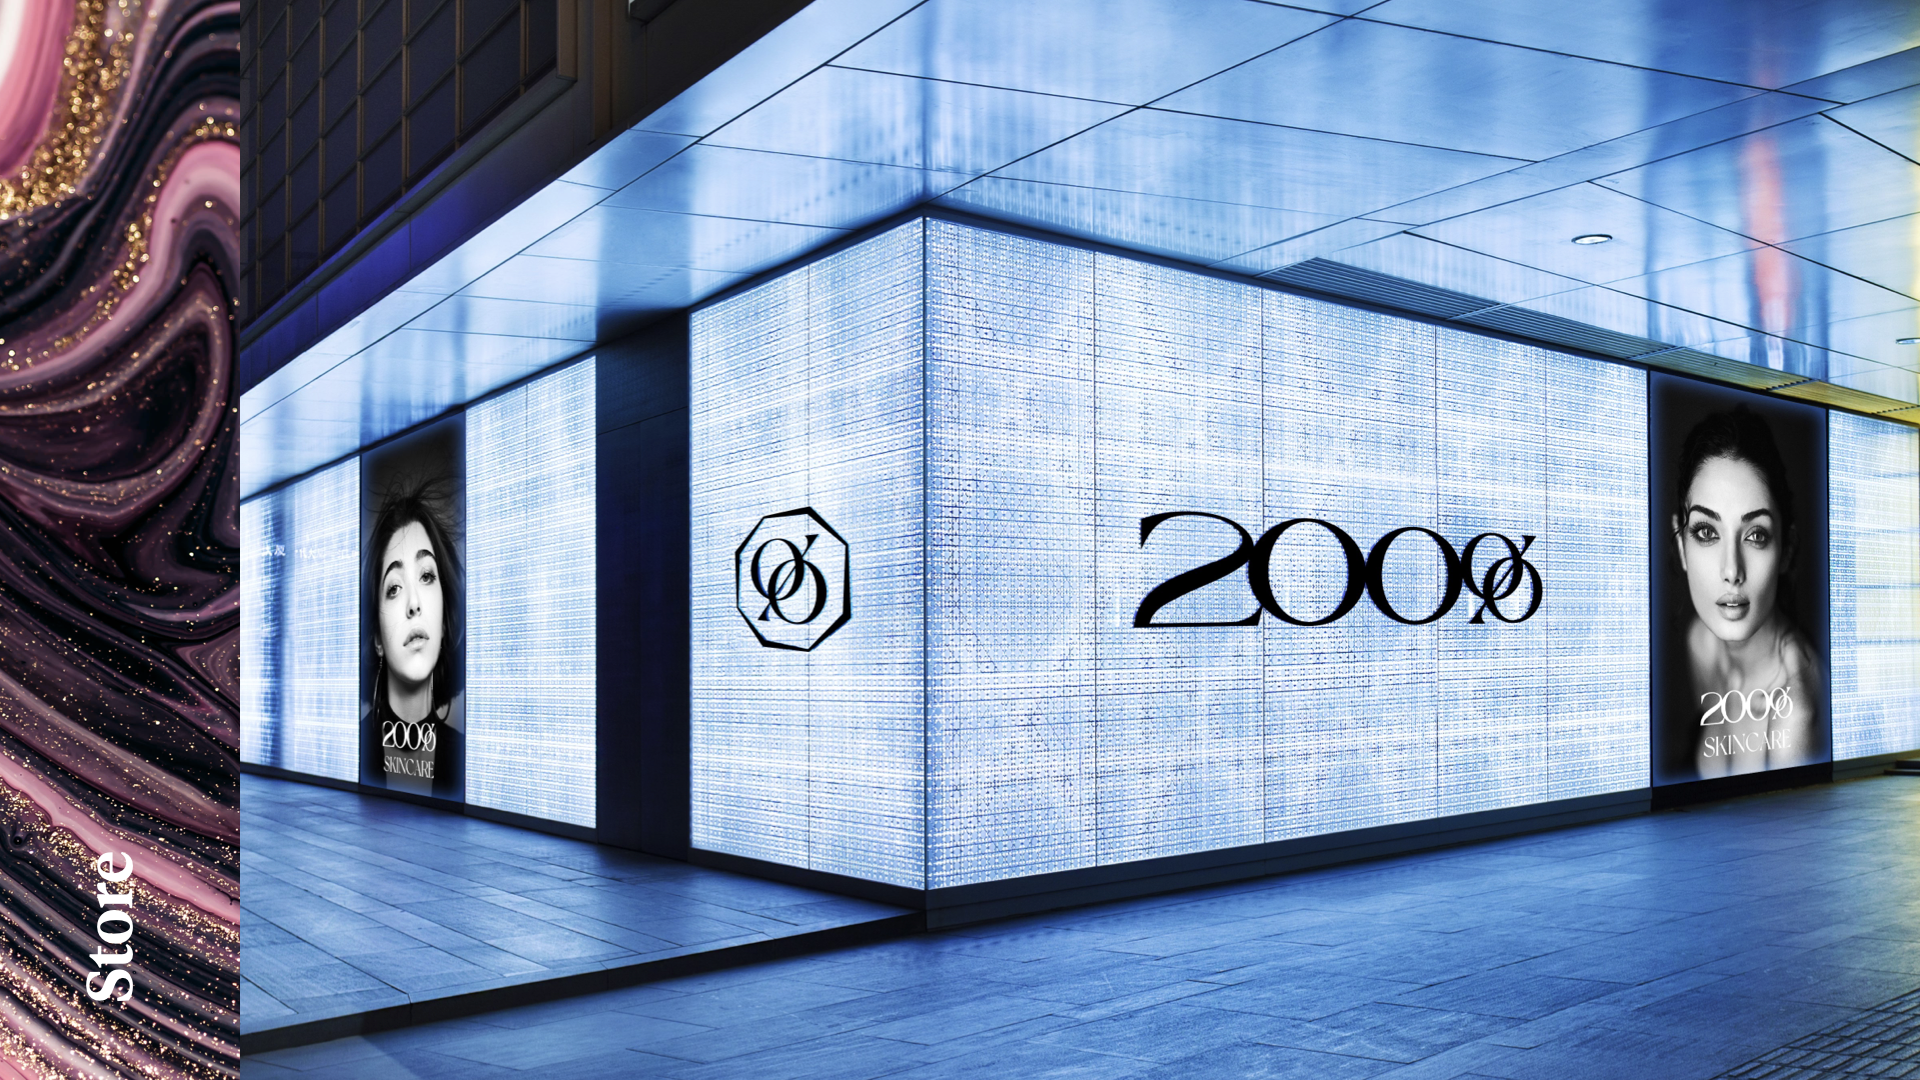 200 percent brand store design